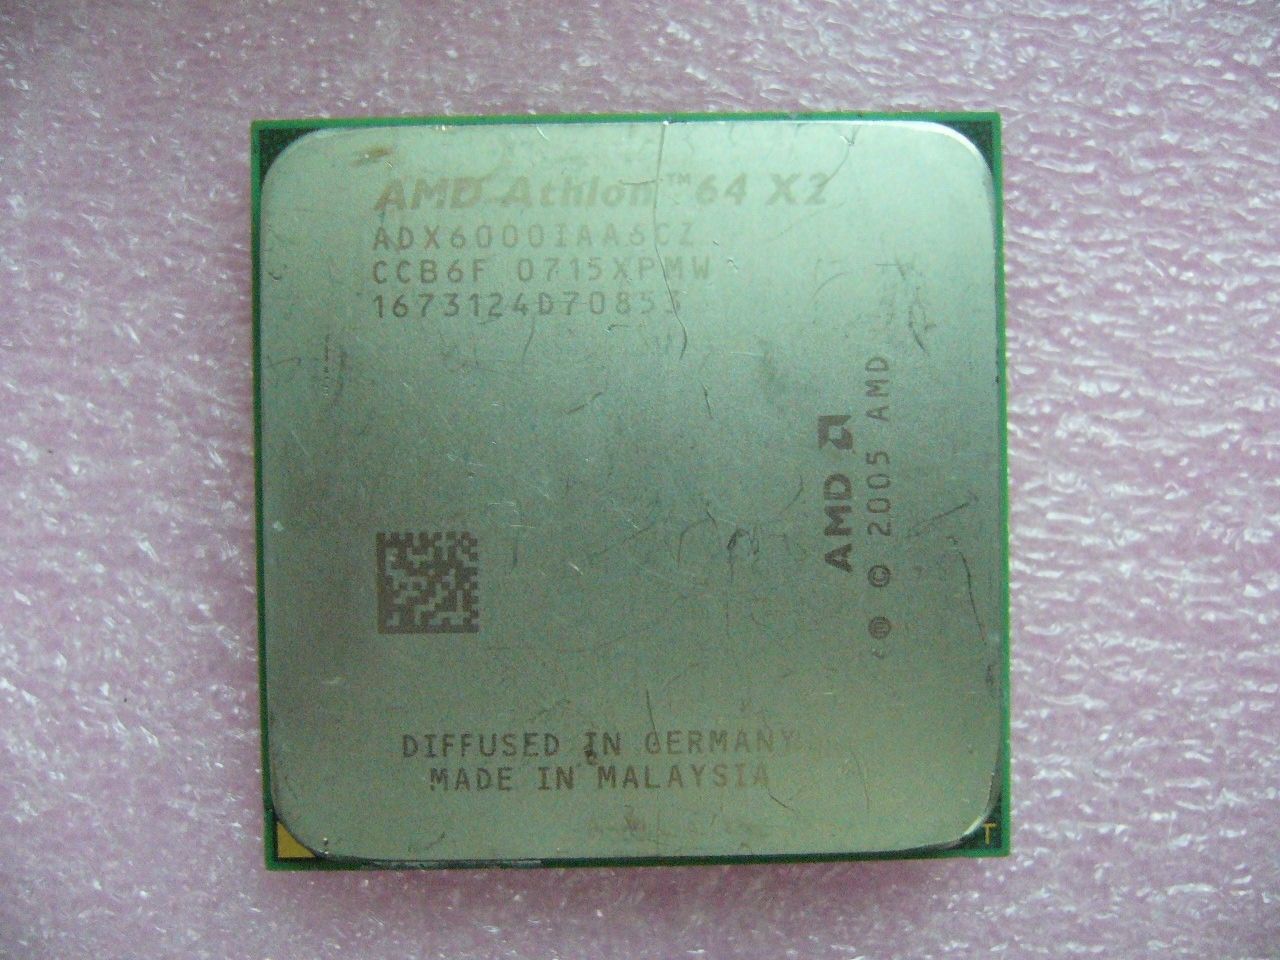 QTY 1x AMD Athlon 64 X2 6000+ 3 GHz Dual-Core (ADX6000IAA6CZ) CPU Socket AM2 - Click Image to Close